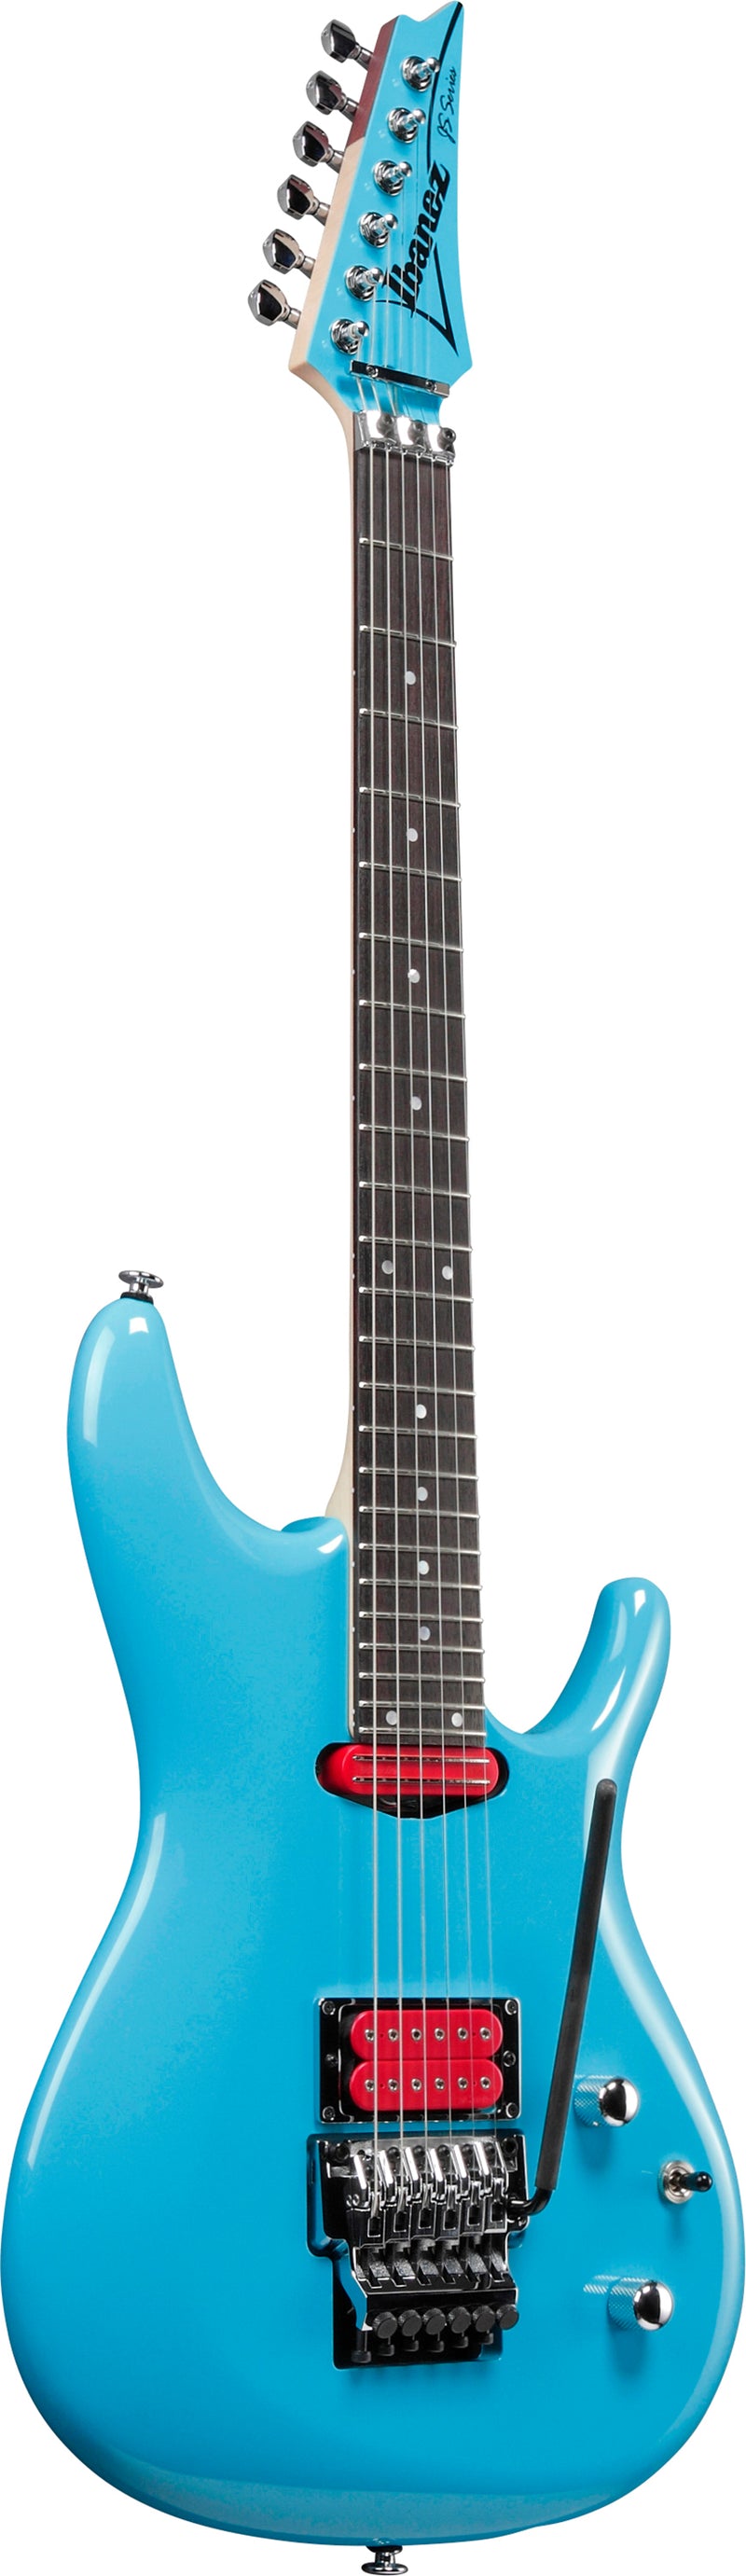 Ibanez Joe Satriani Signature JS2410 Electric Guitar w/Case - Sky Blue